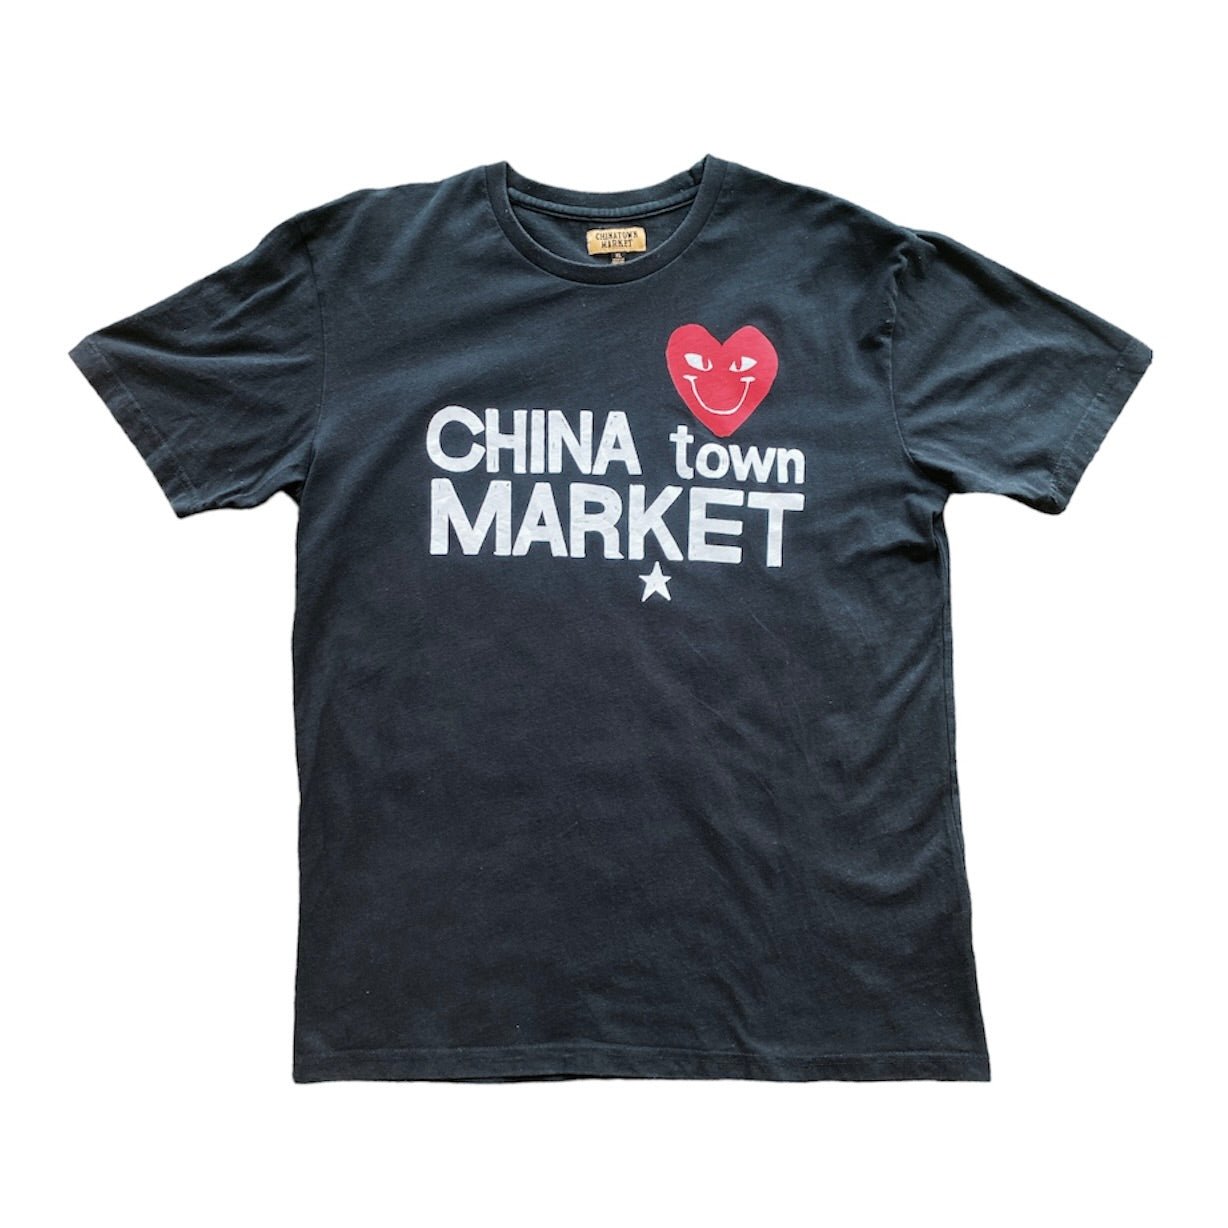 Chinatown Market CDG Parody Black Tshirt